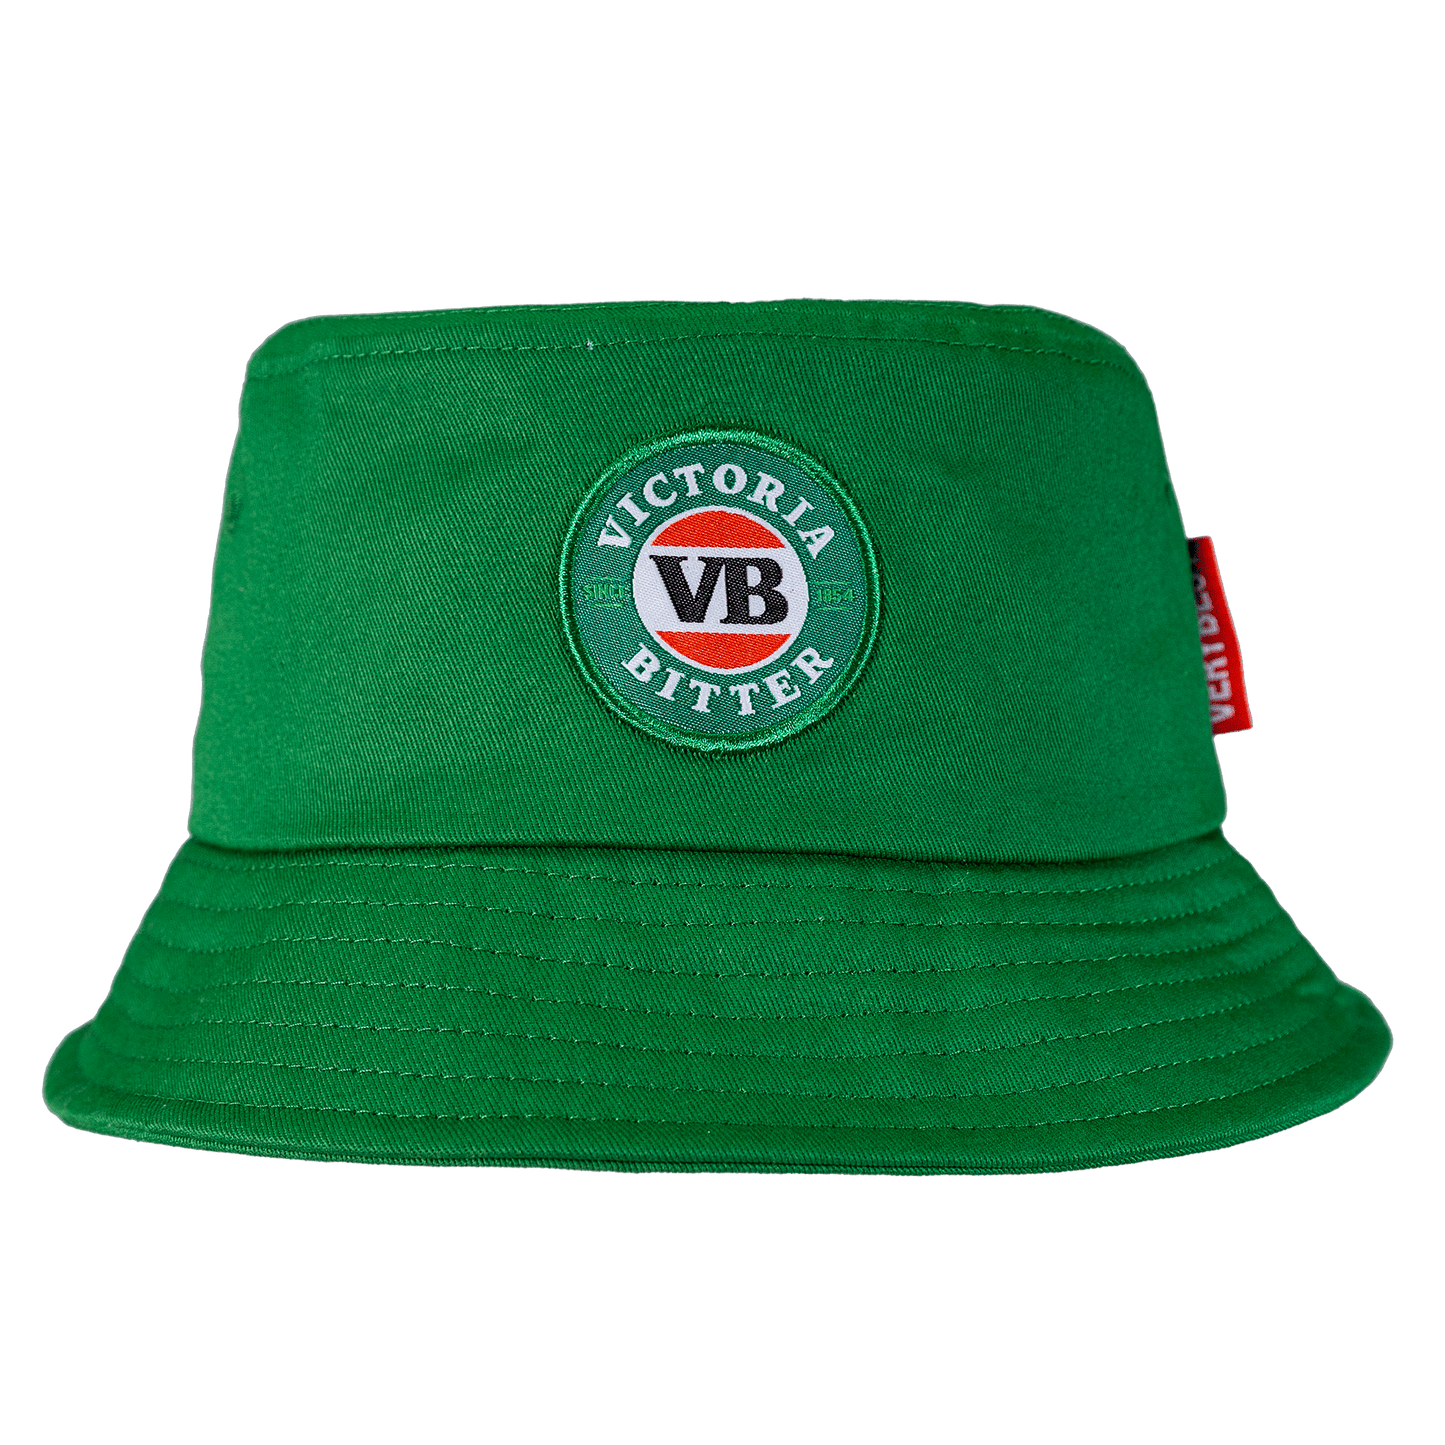 Victor Bravo's Bucket Hat VB 2018 Bucket Hat